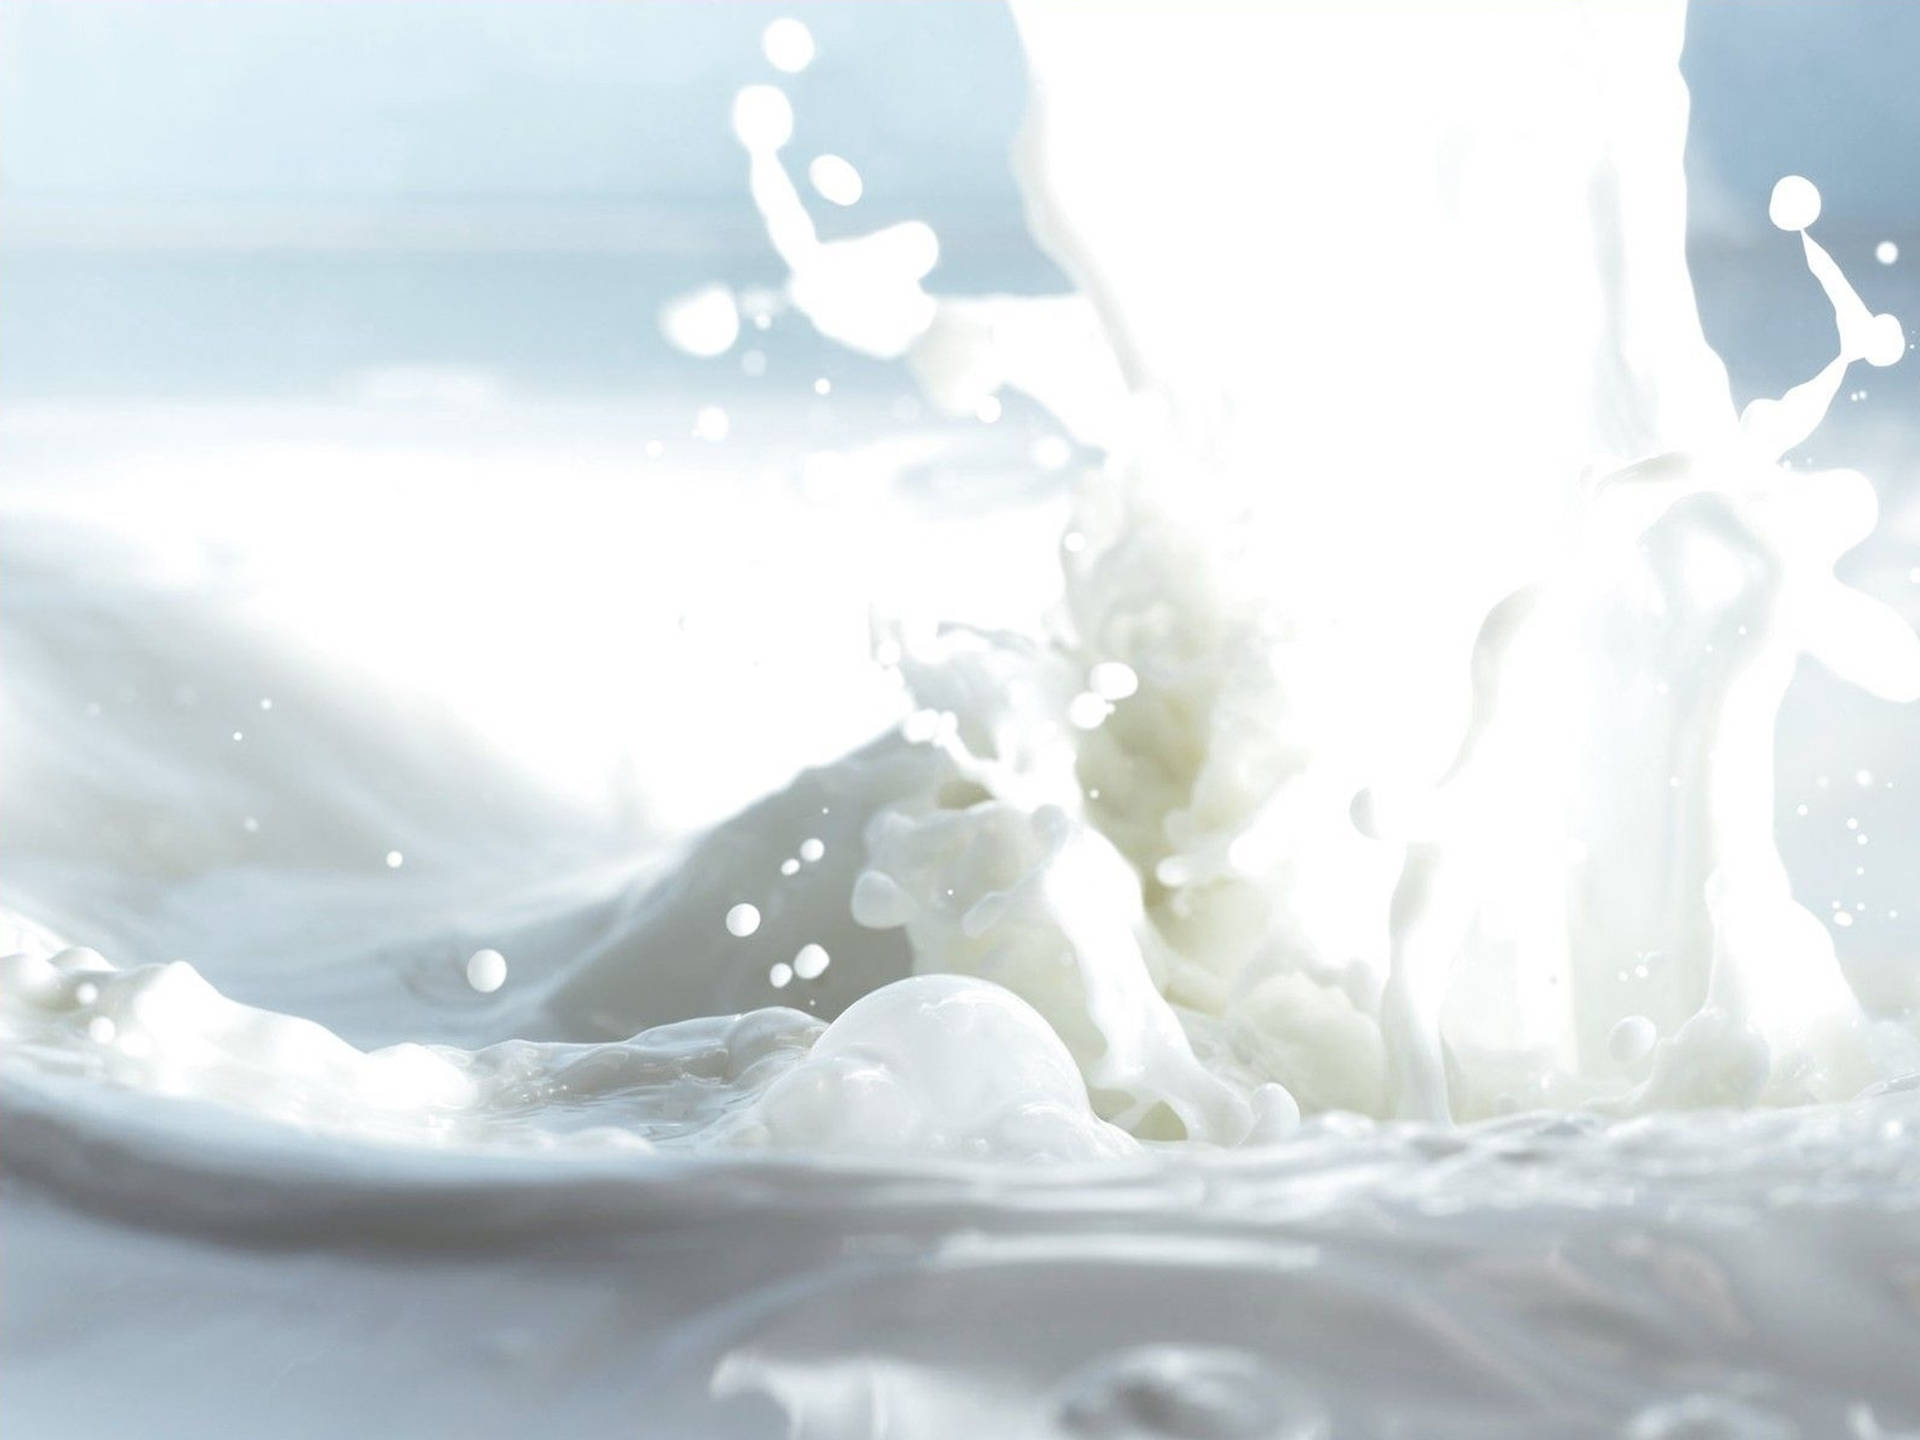 Splashing White Milk Liquid With Droplets